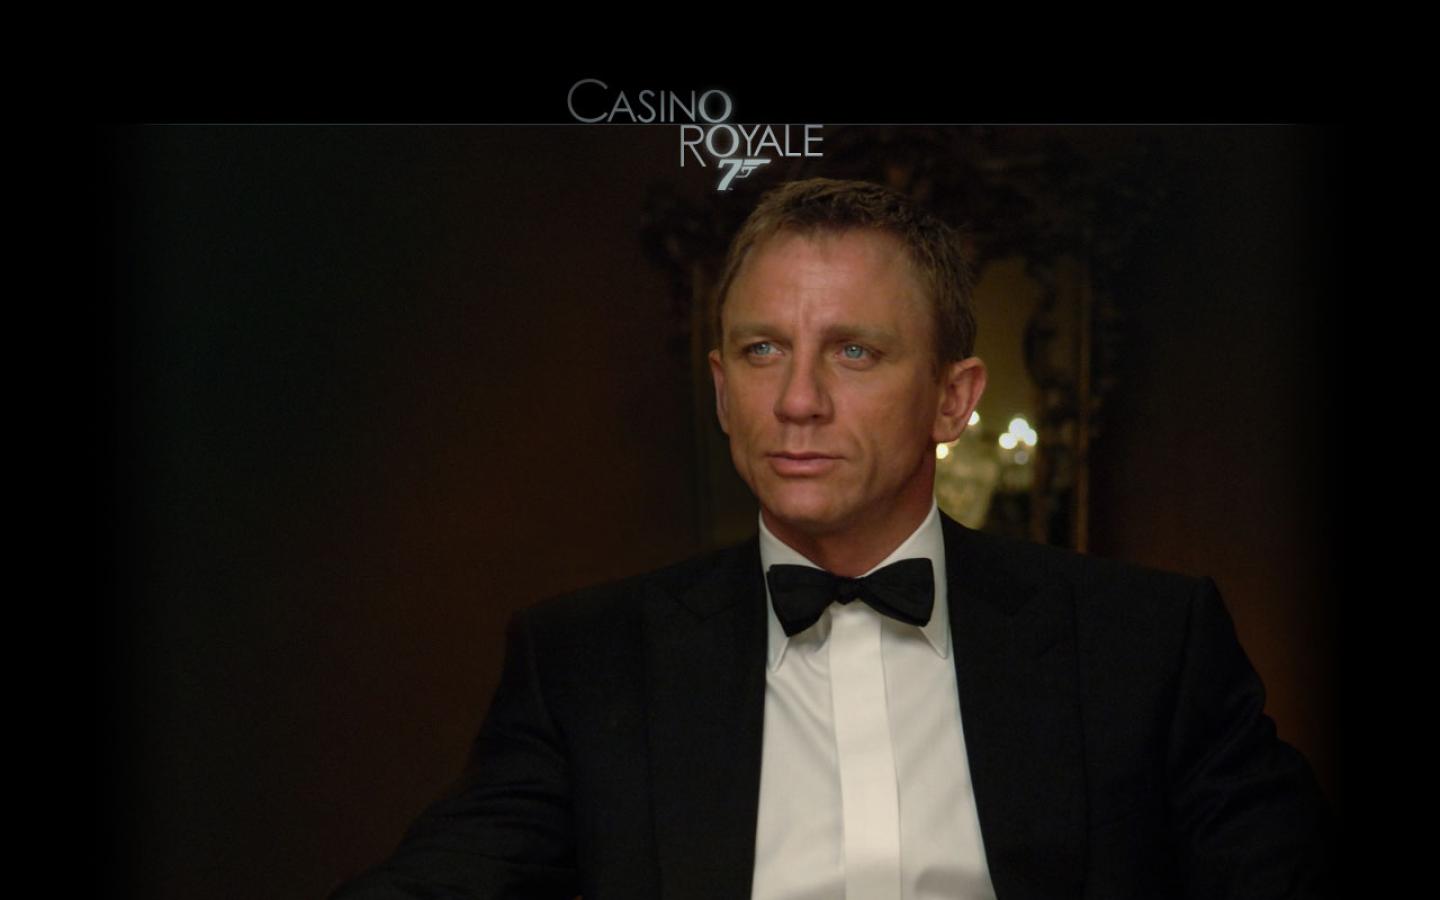 Casino Royale Wallpaper #2 1440 x 900 